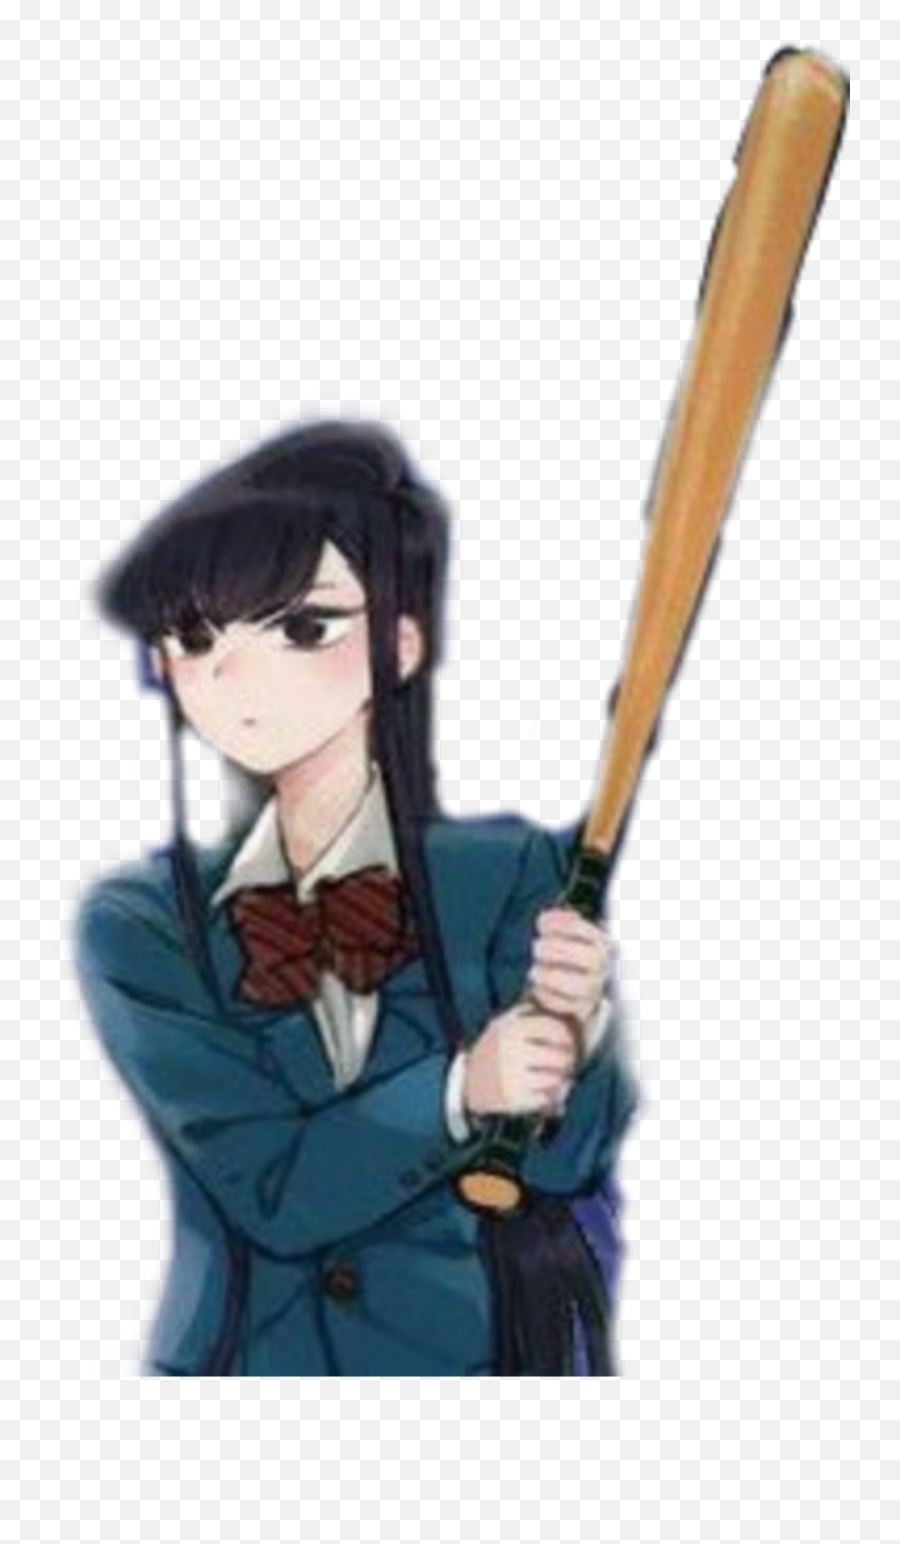 Komisan Manga Anime Meme Sticker By Captain Spice - Composite Baseball Bat Emoji,Lucille Baseball Bat Emojis